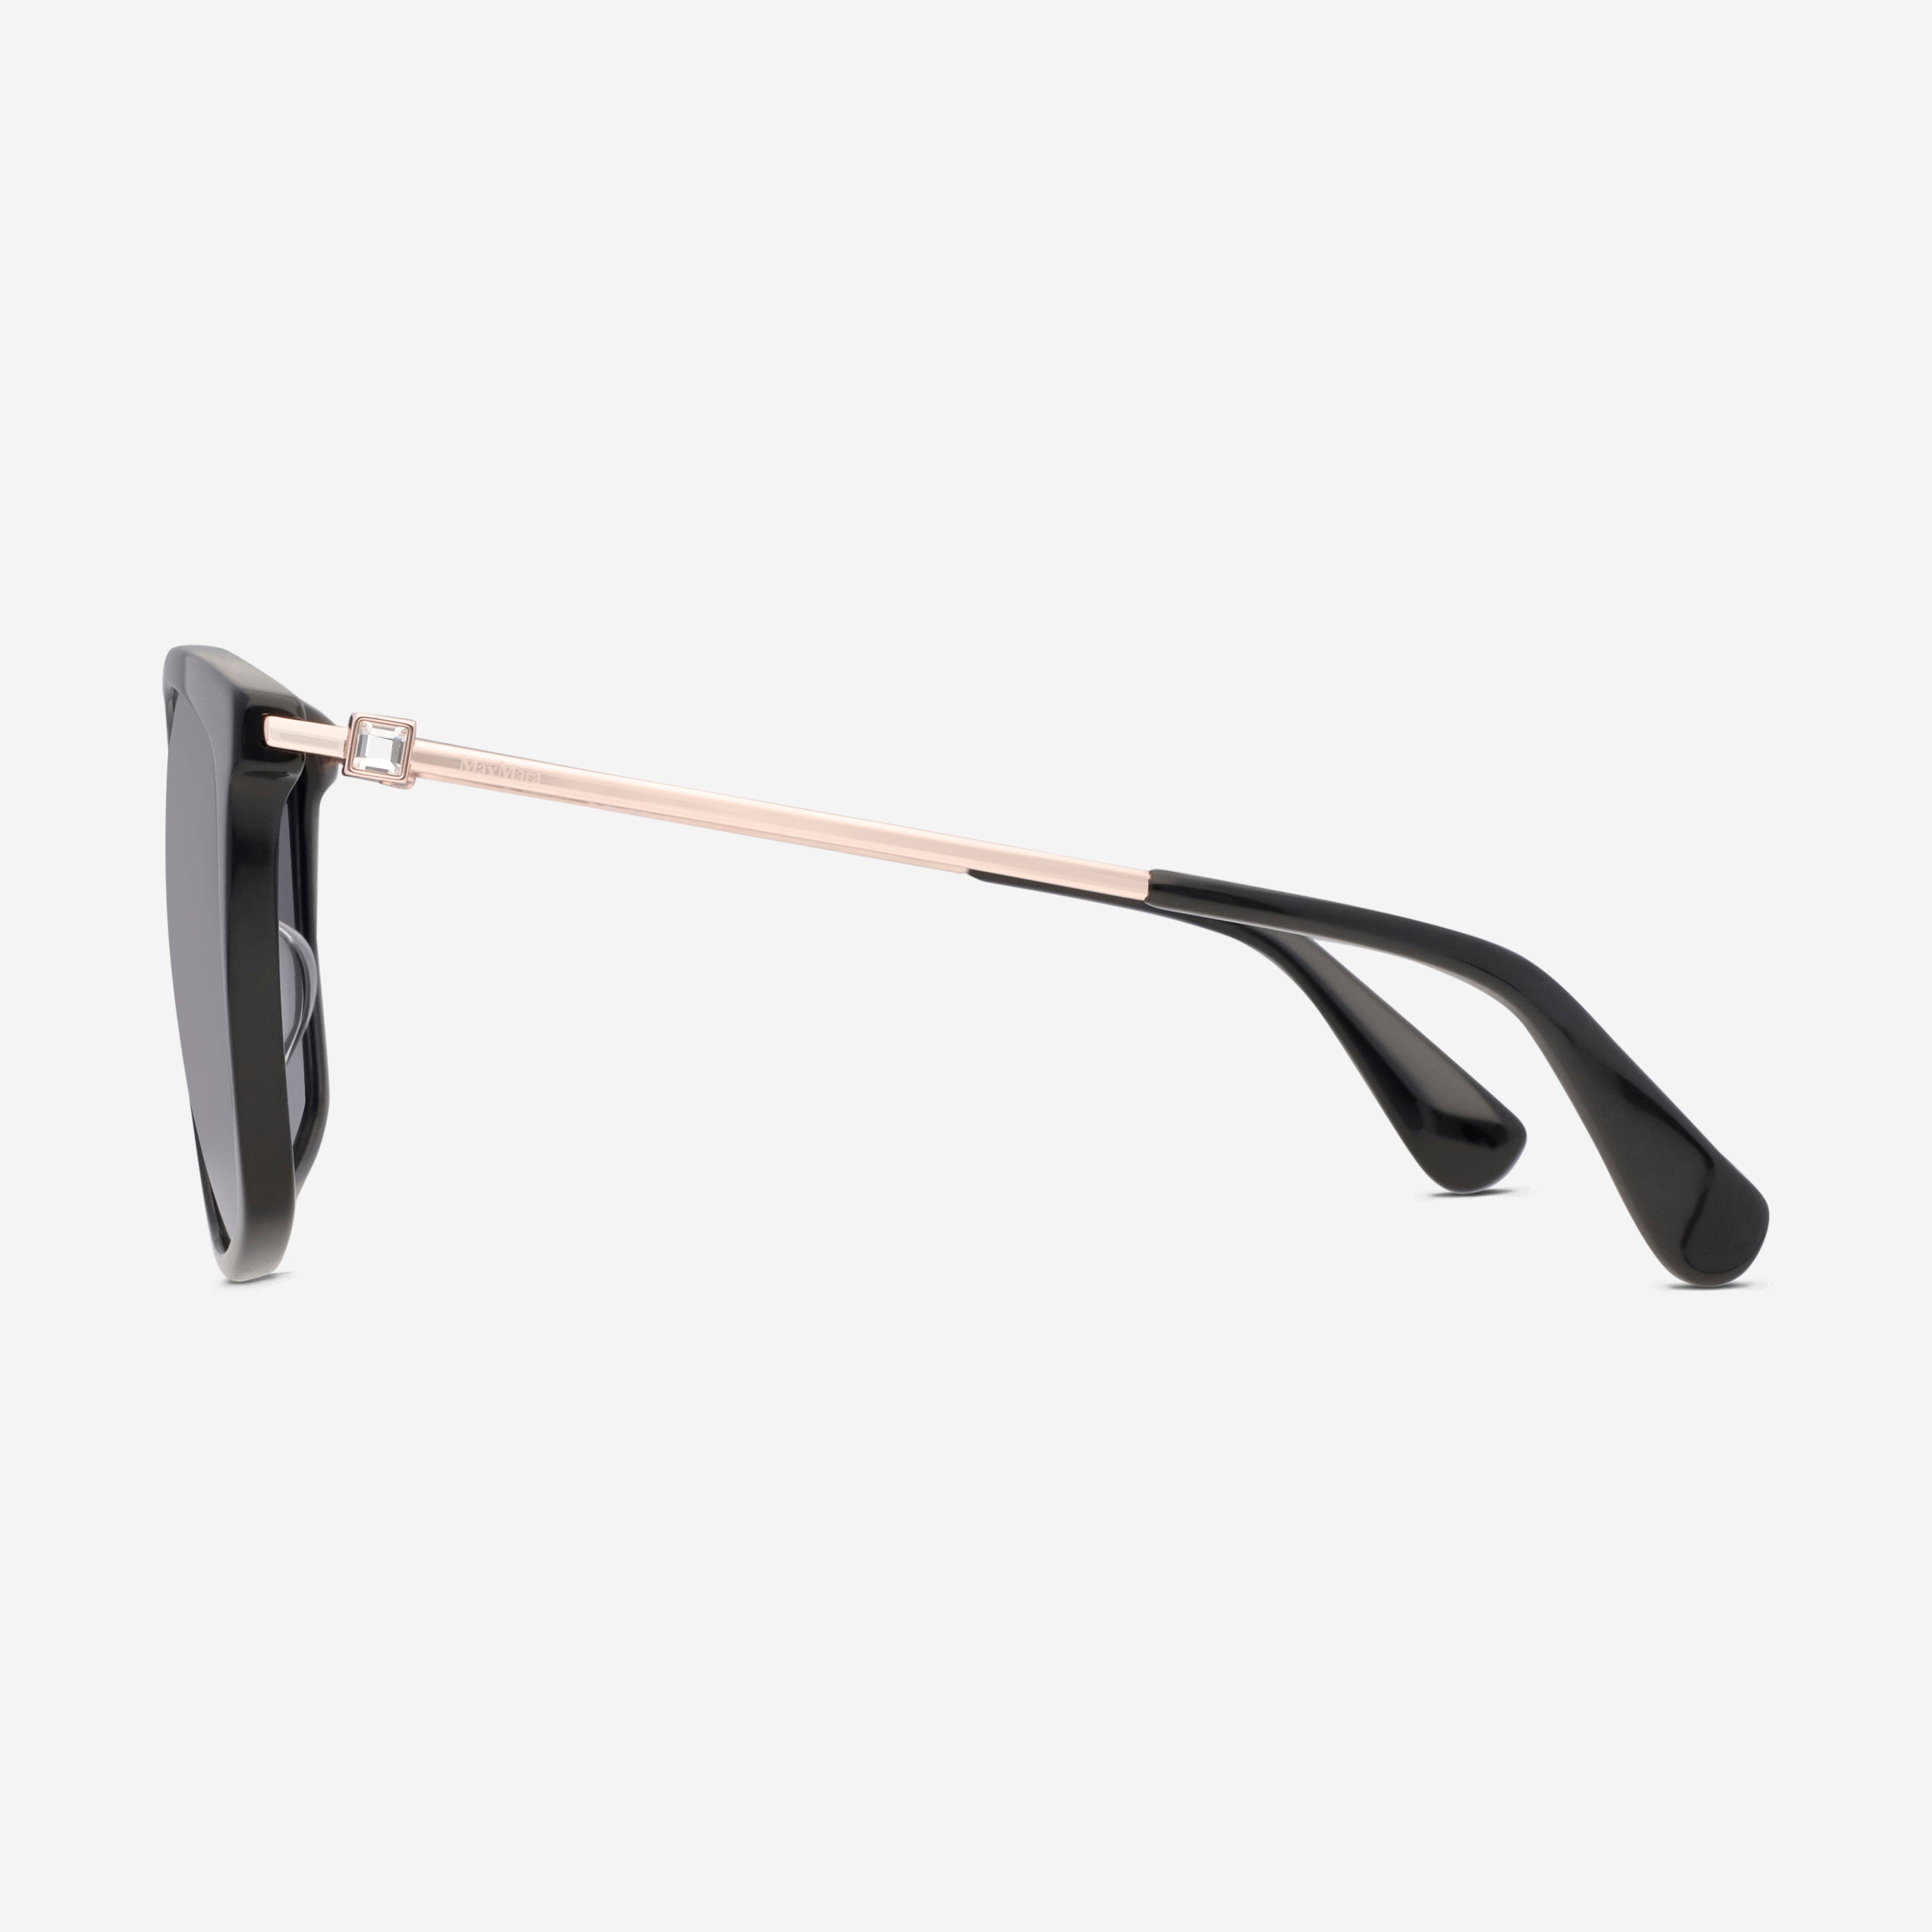 MaxMara Women's Shiny Black & Gradient Smoke Square Sunglasses MM0055-F